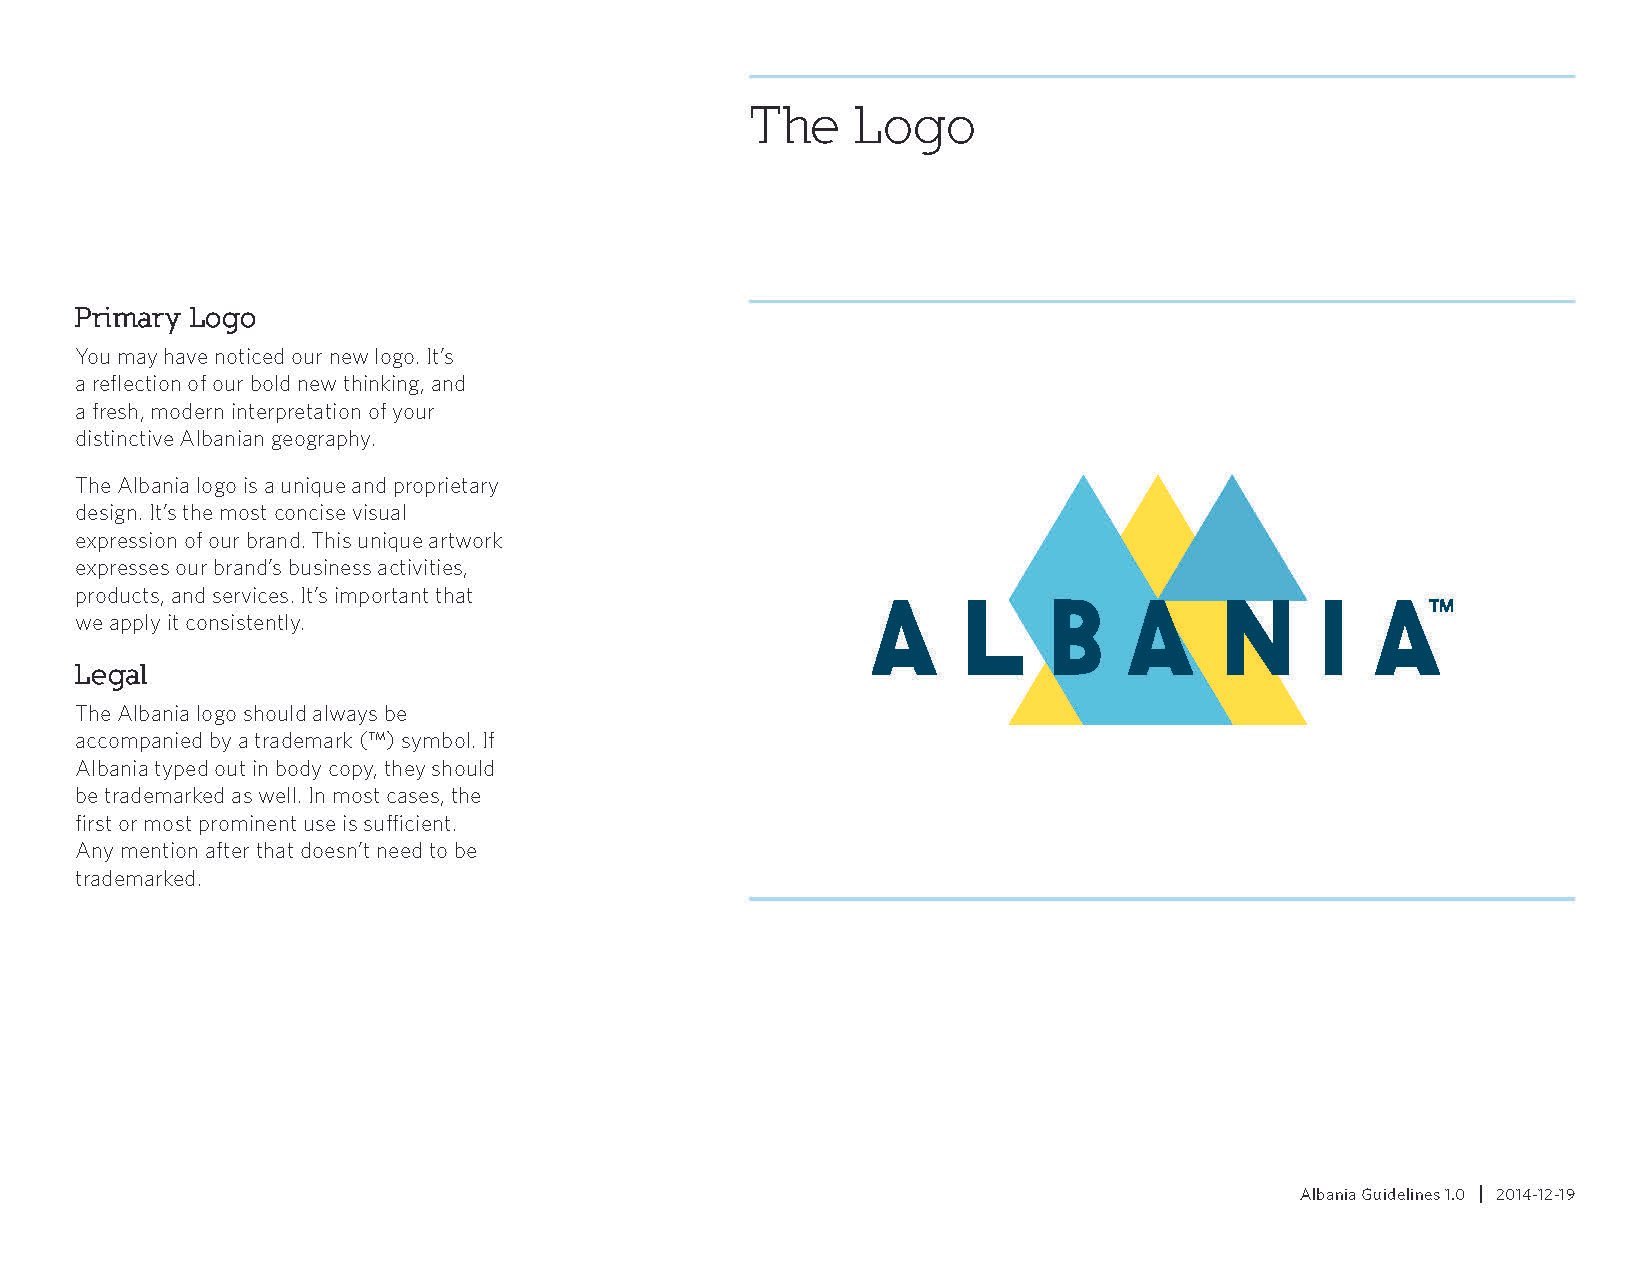 Albania_GuidelinesV1_2014-12-22_Page_04.jpg